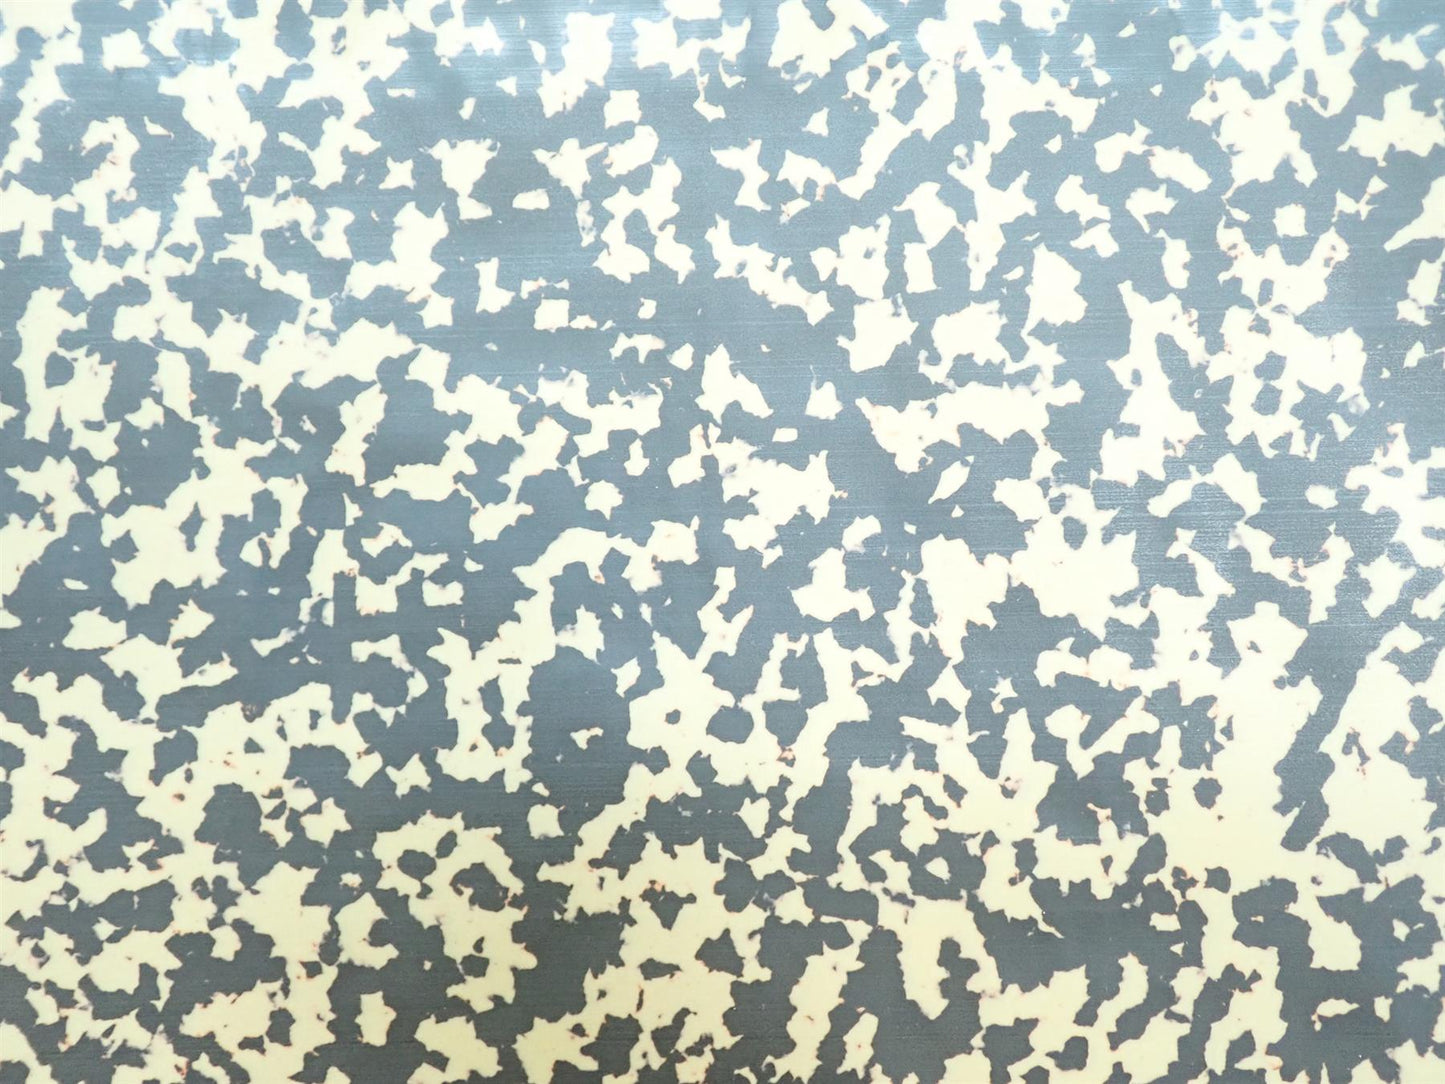 Incudo White Spotted Tortoiseshell Celluloid Veneer / Wrap - 1600x700x0.17mm (63x27.56x0.007")